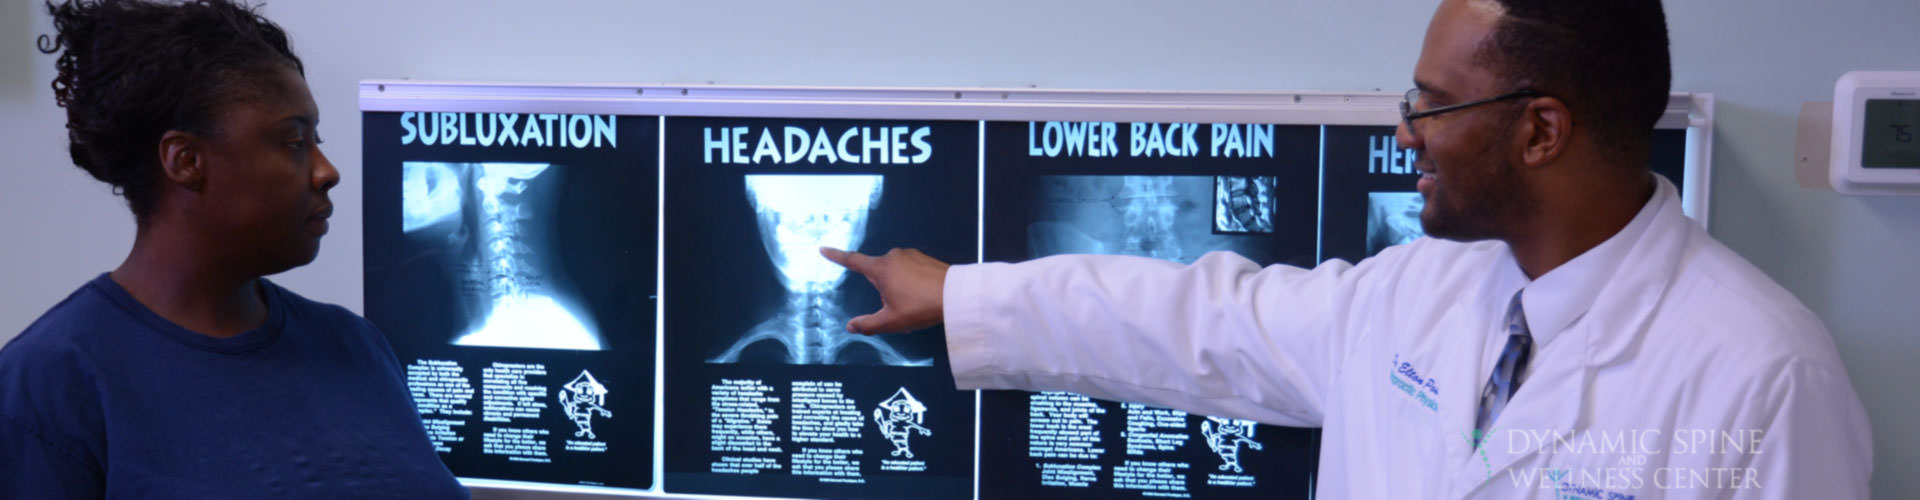 Tallahassee Chiropractor Treating Headaches No Drugs